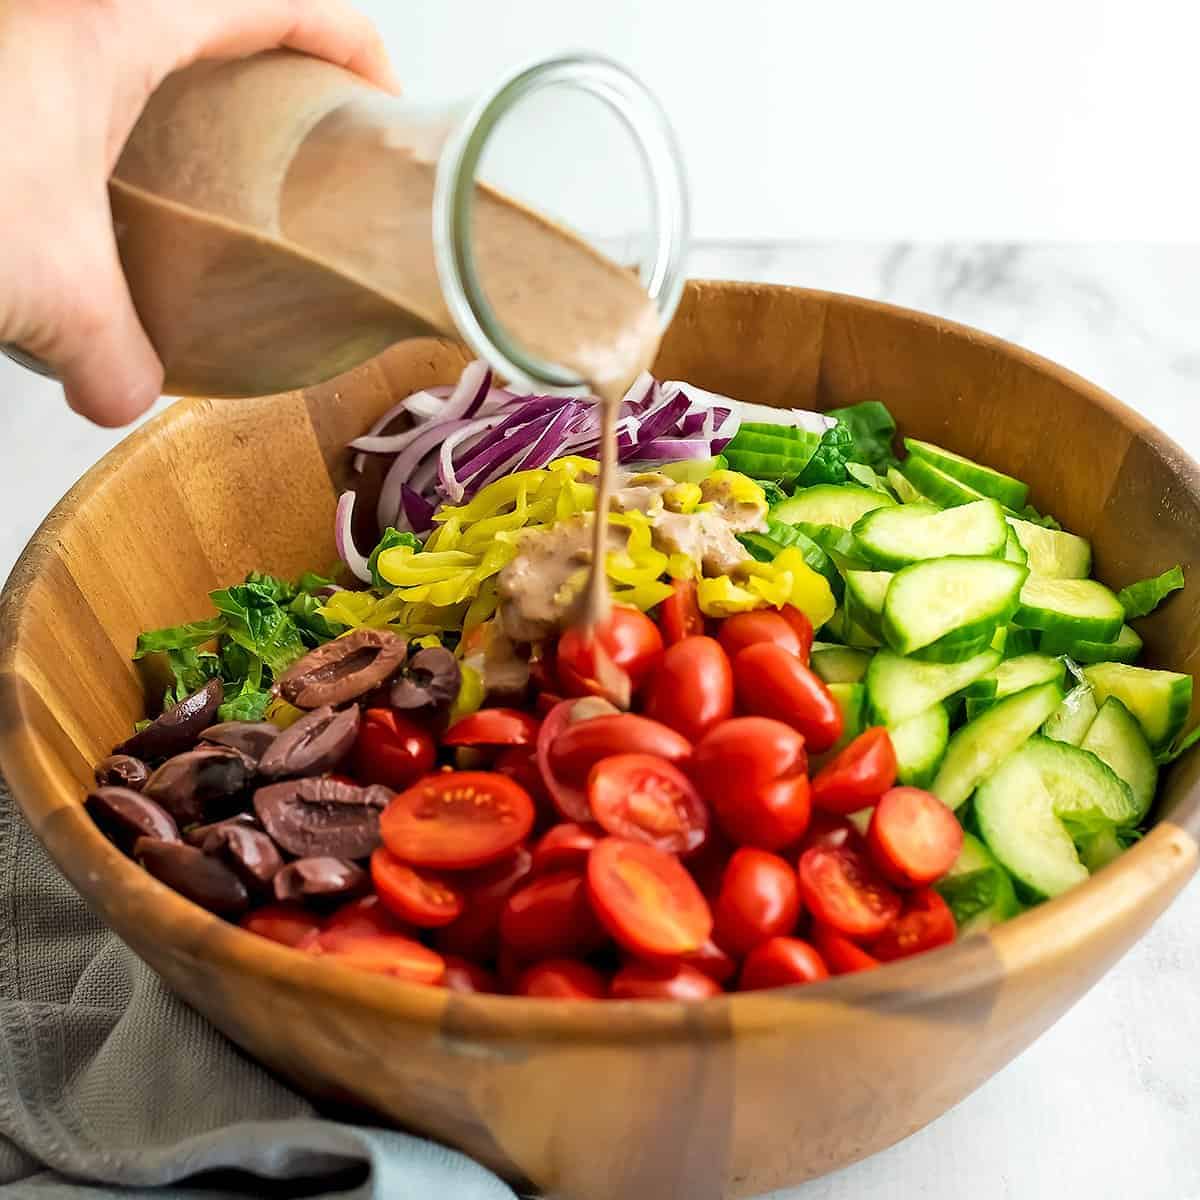 https://bitesofwellness.com/wp-content/uploads/2021/01/Whole30-greek-salad-social1.jpg